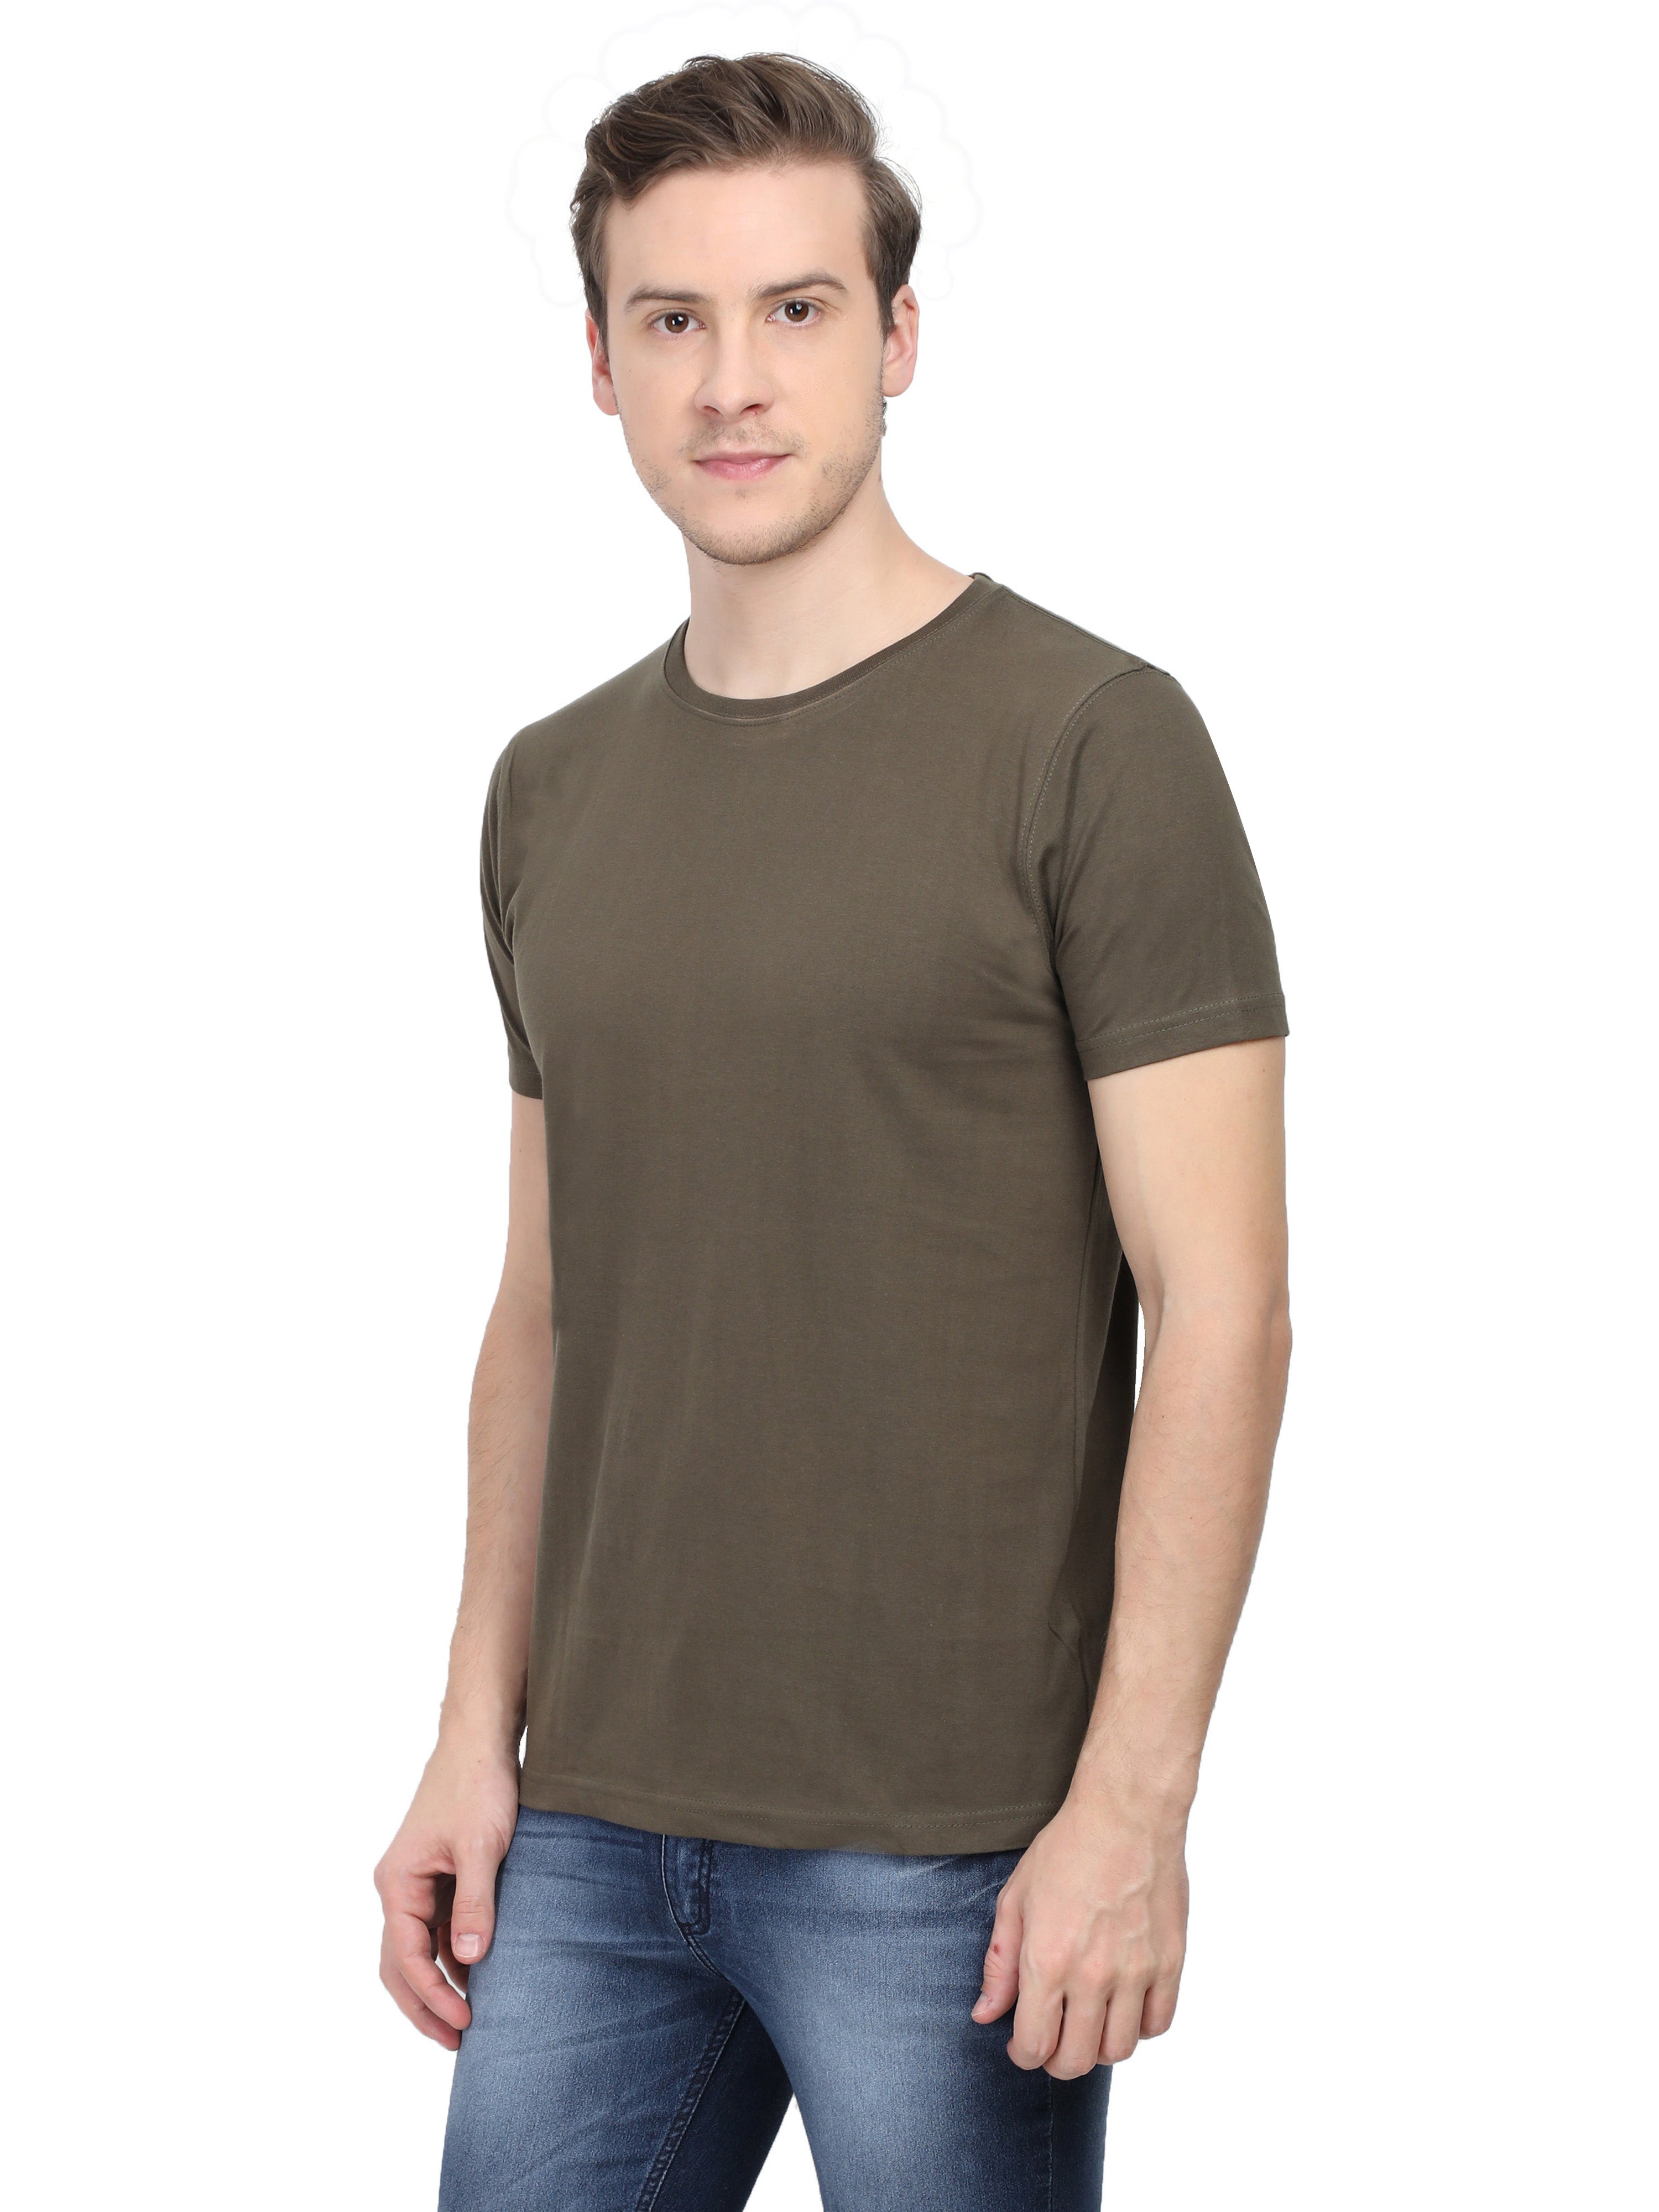 Solids: Olive Green Premium T-shirt